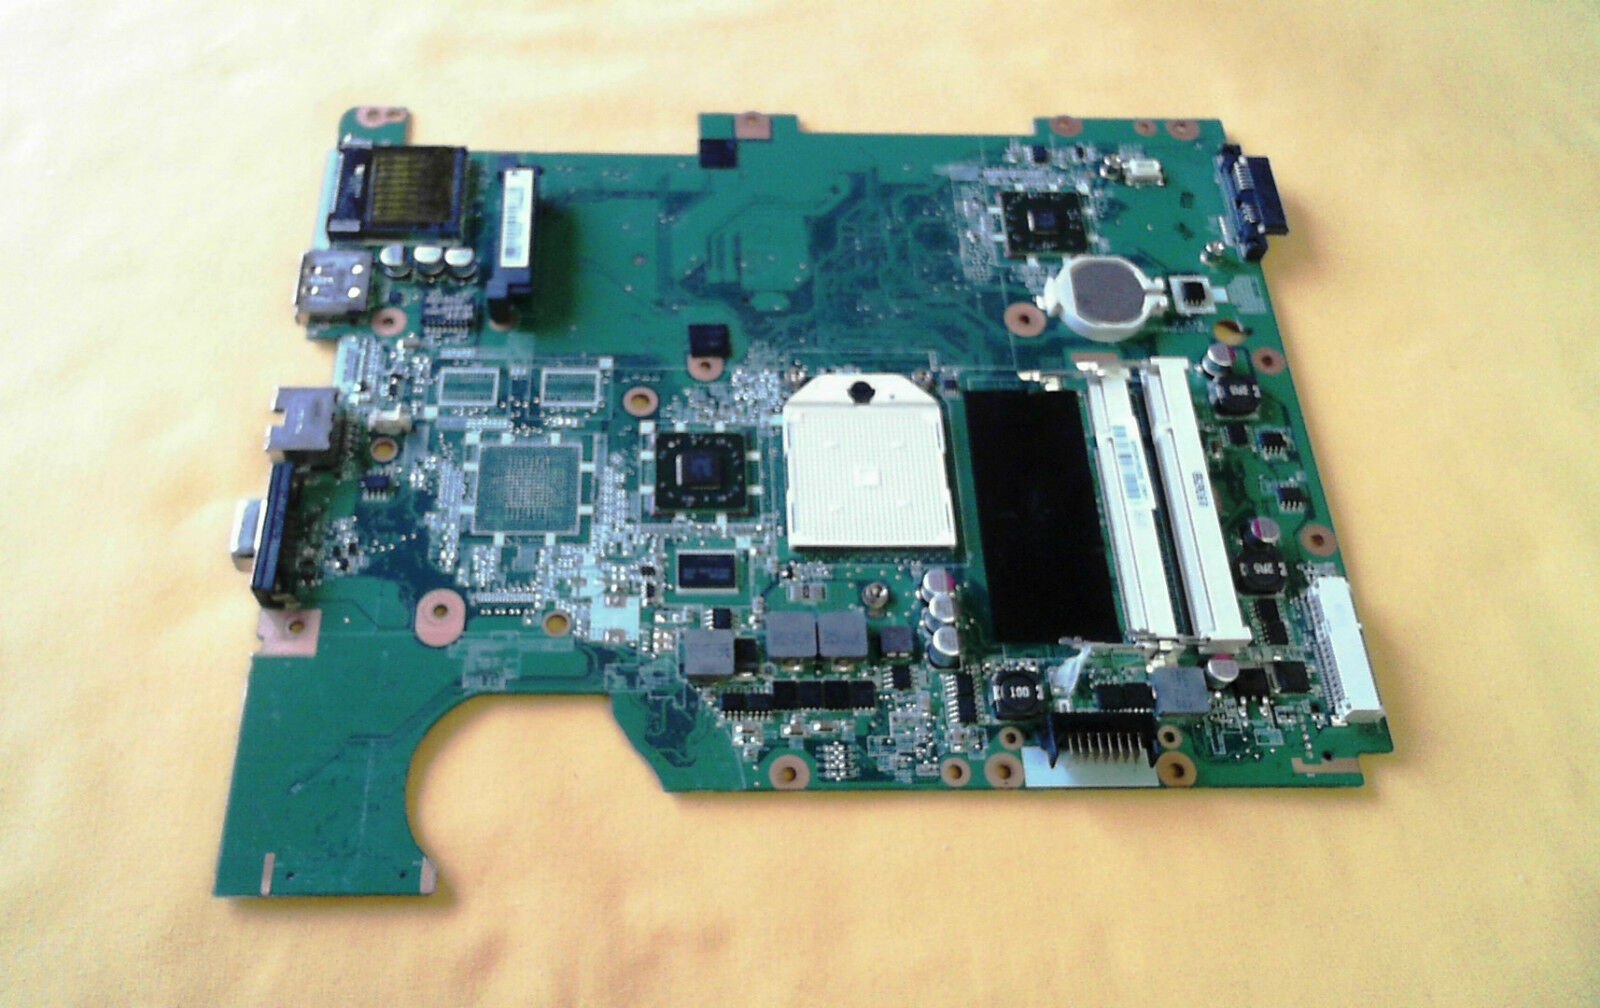 Compaq CQ61 Genuine Motherboard 577064-001 Nice NO HDMI port Buy HALF Bottom, instead of just motherboar